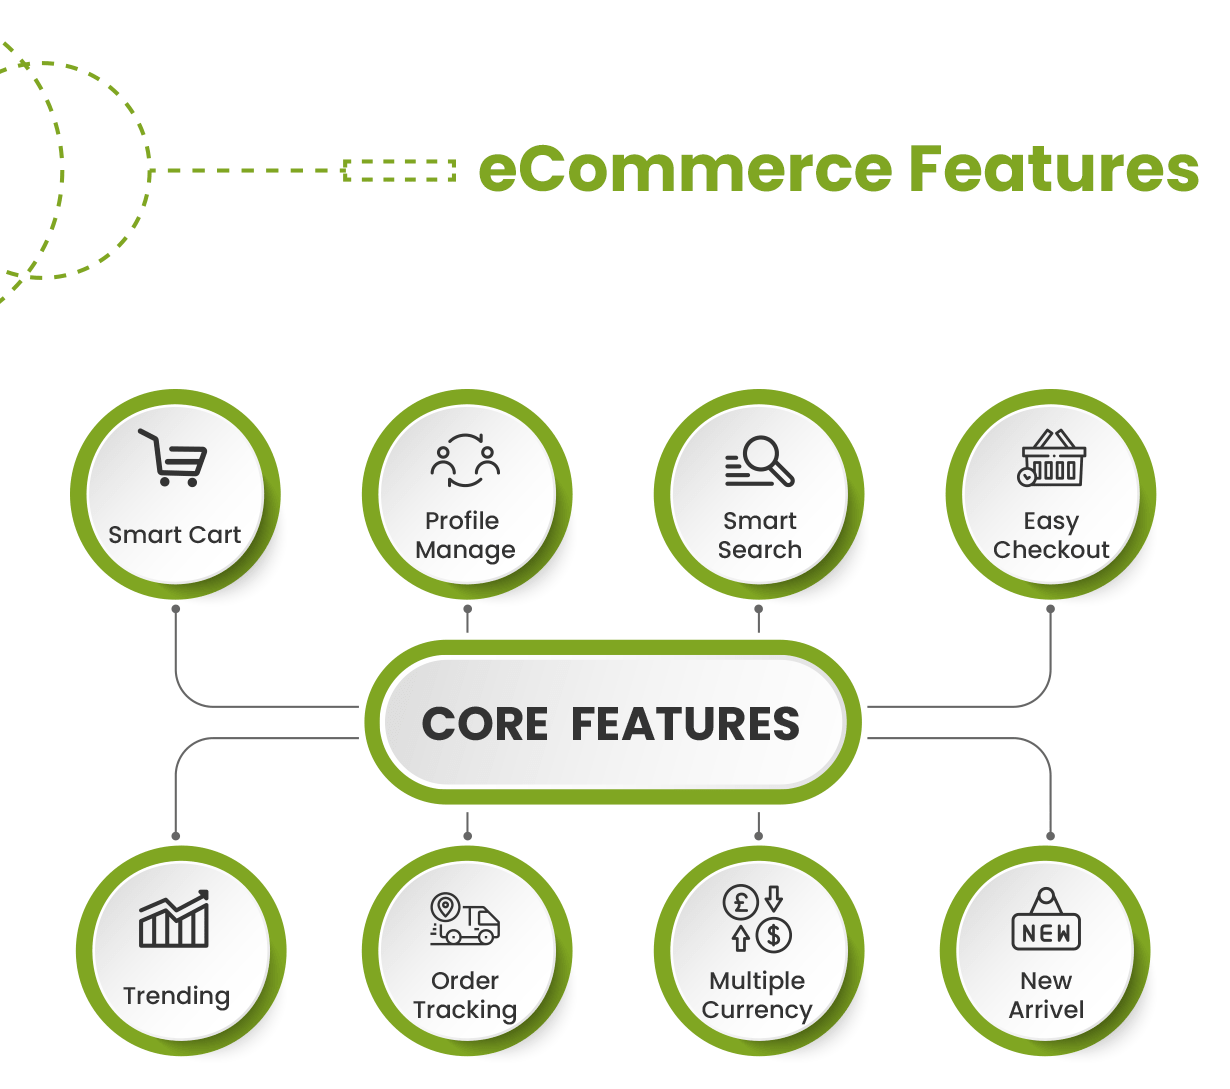 eCart Web - Ecommerce / Store Full Website - 9